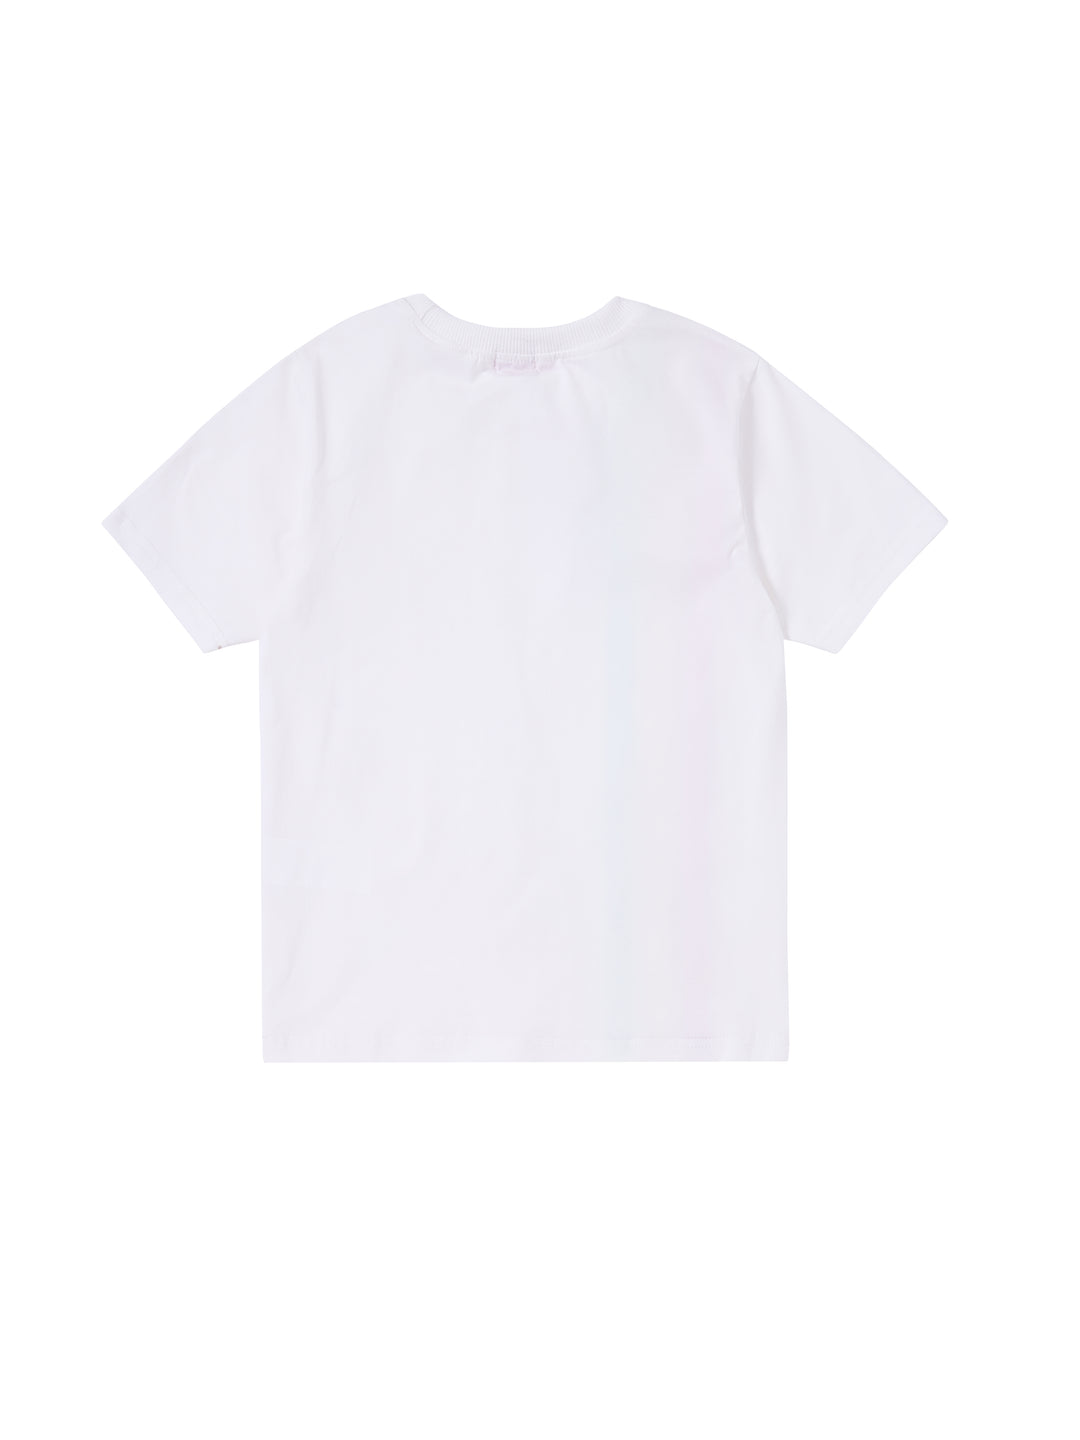 Side Stripe Print Short Sleeve T-shirt - White/Orange Red